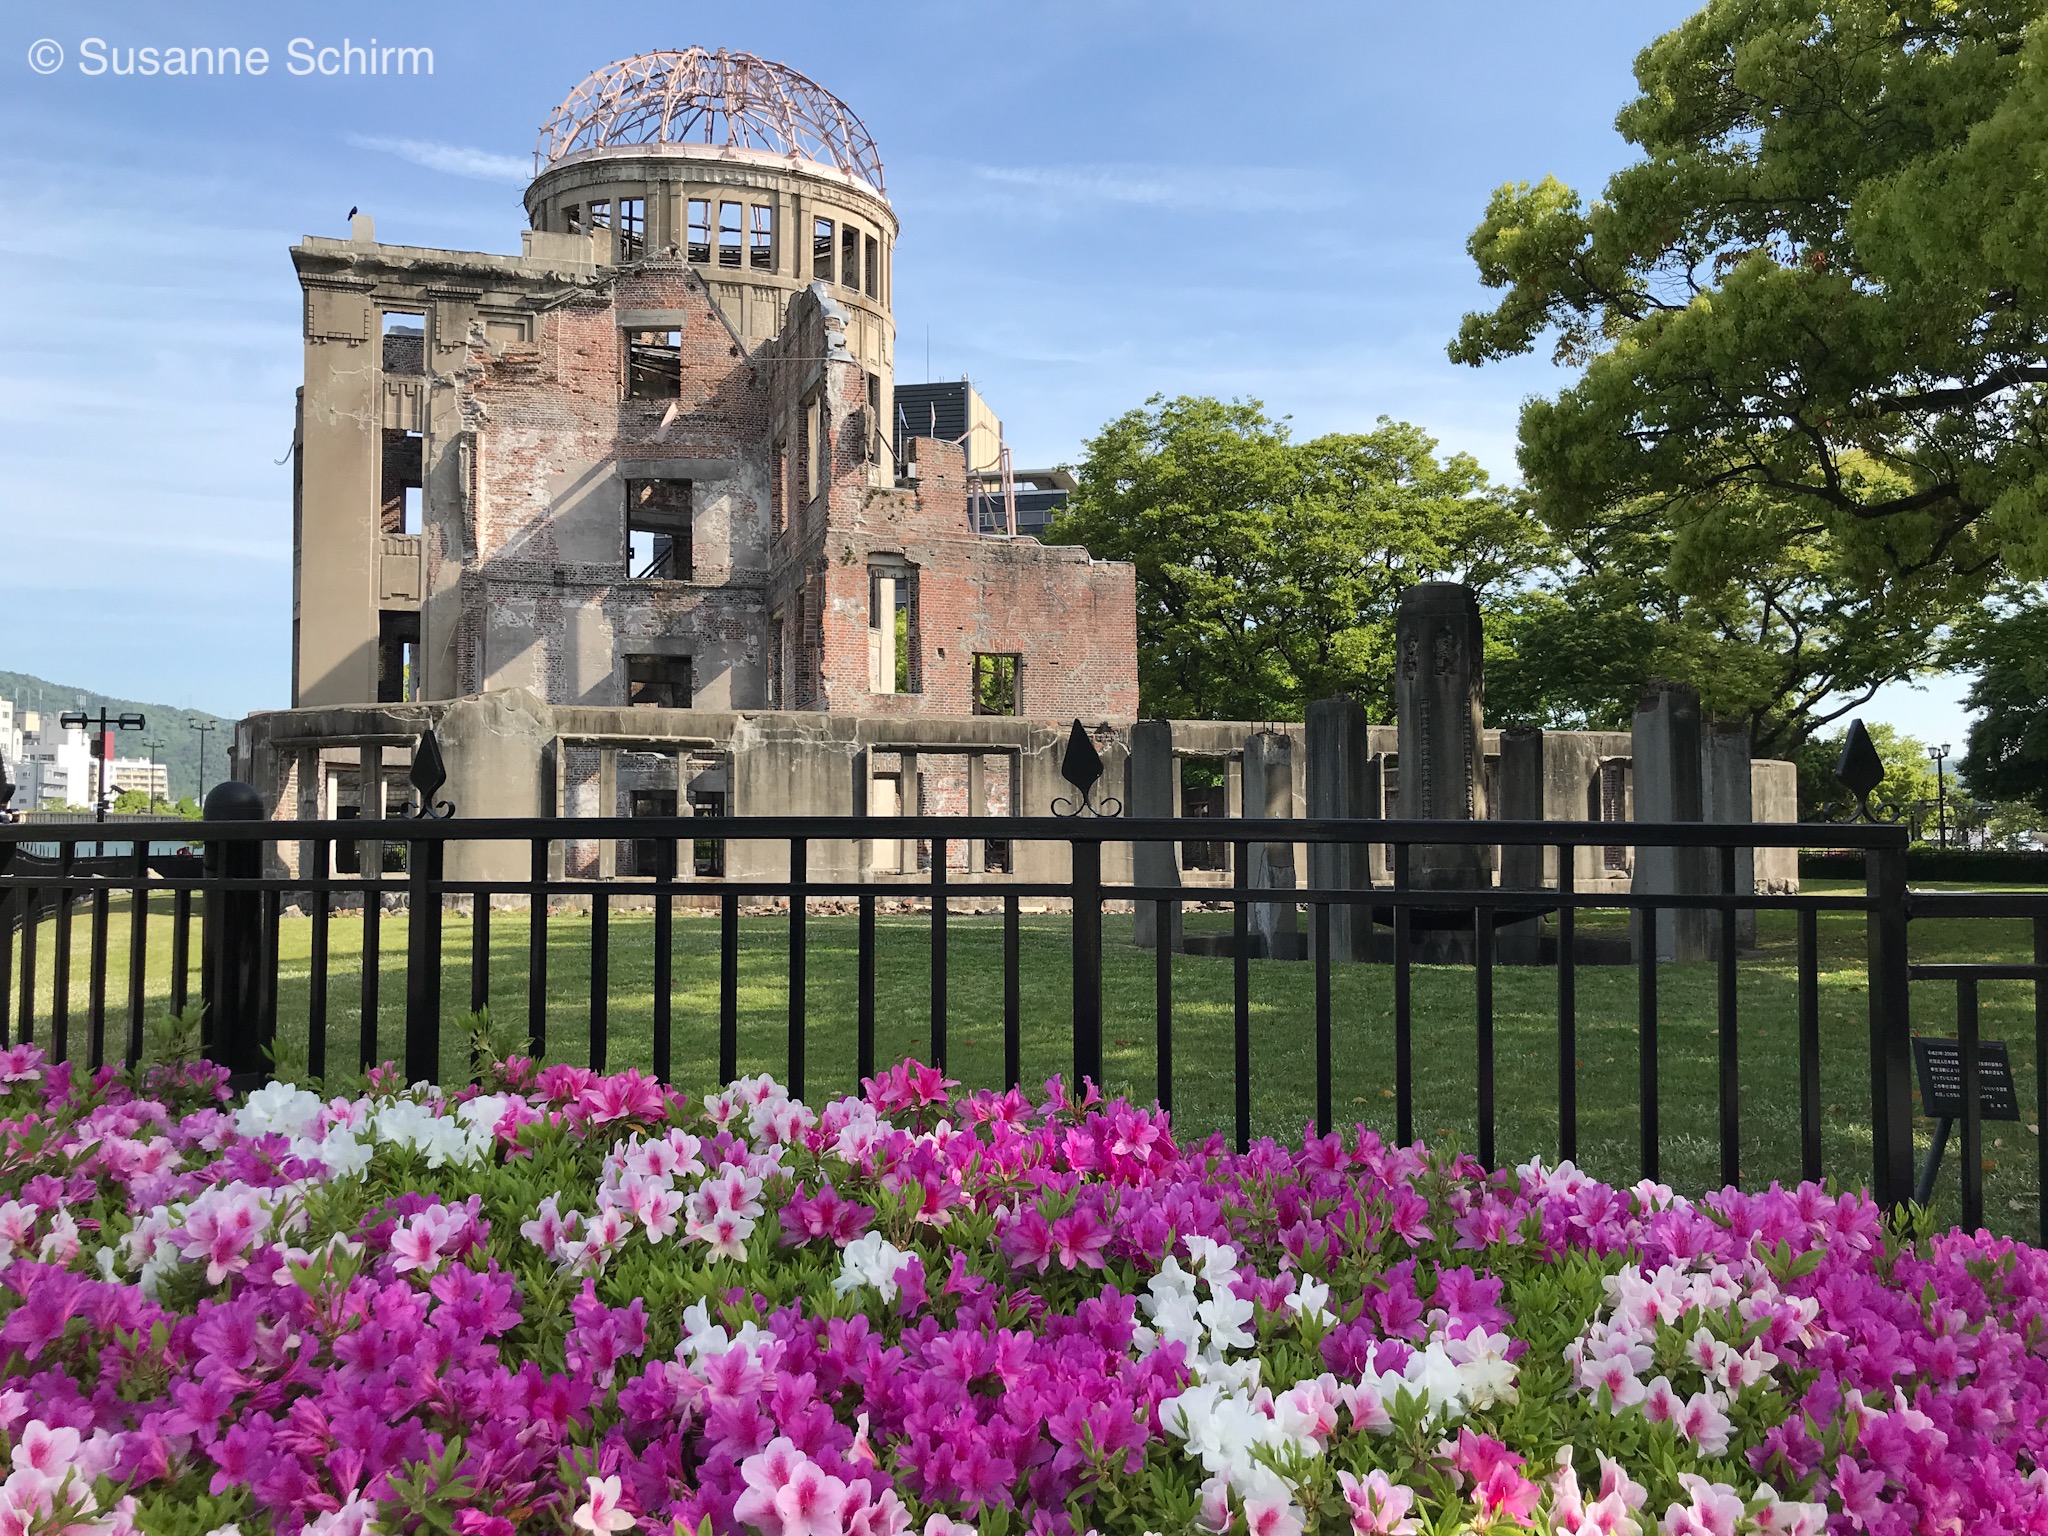 Bild vom Friedensdenkmal in Hiroshima